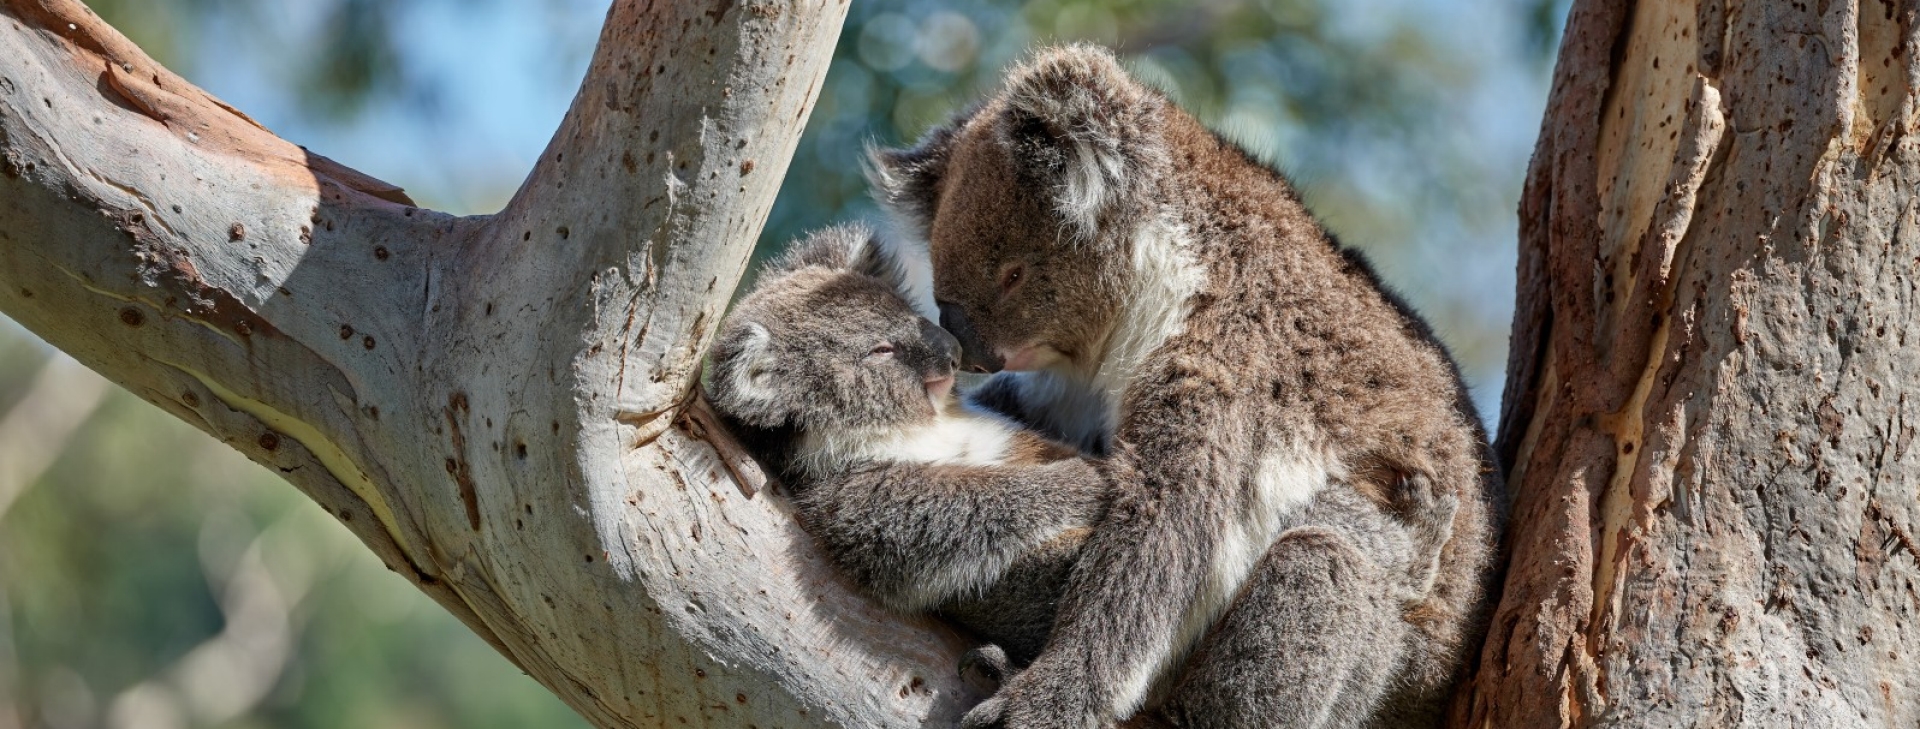 Koalas, Greenhill Road © George Papanicolaou